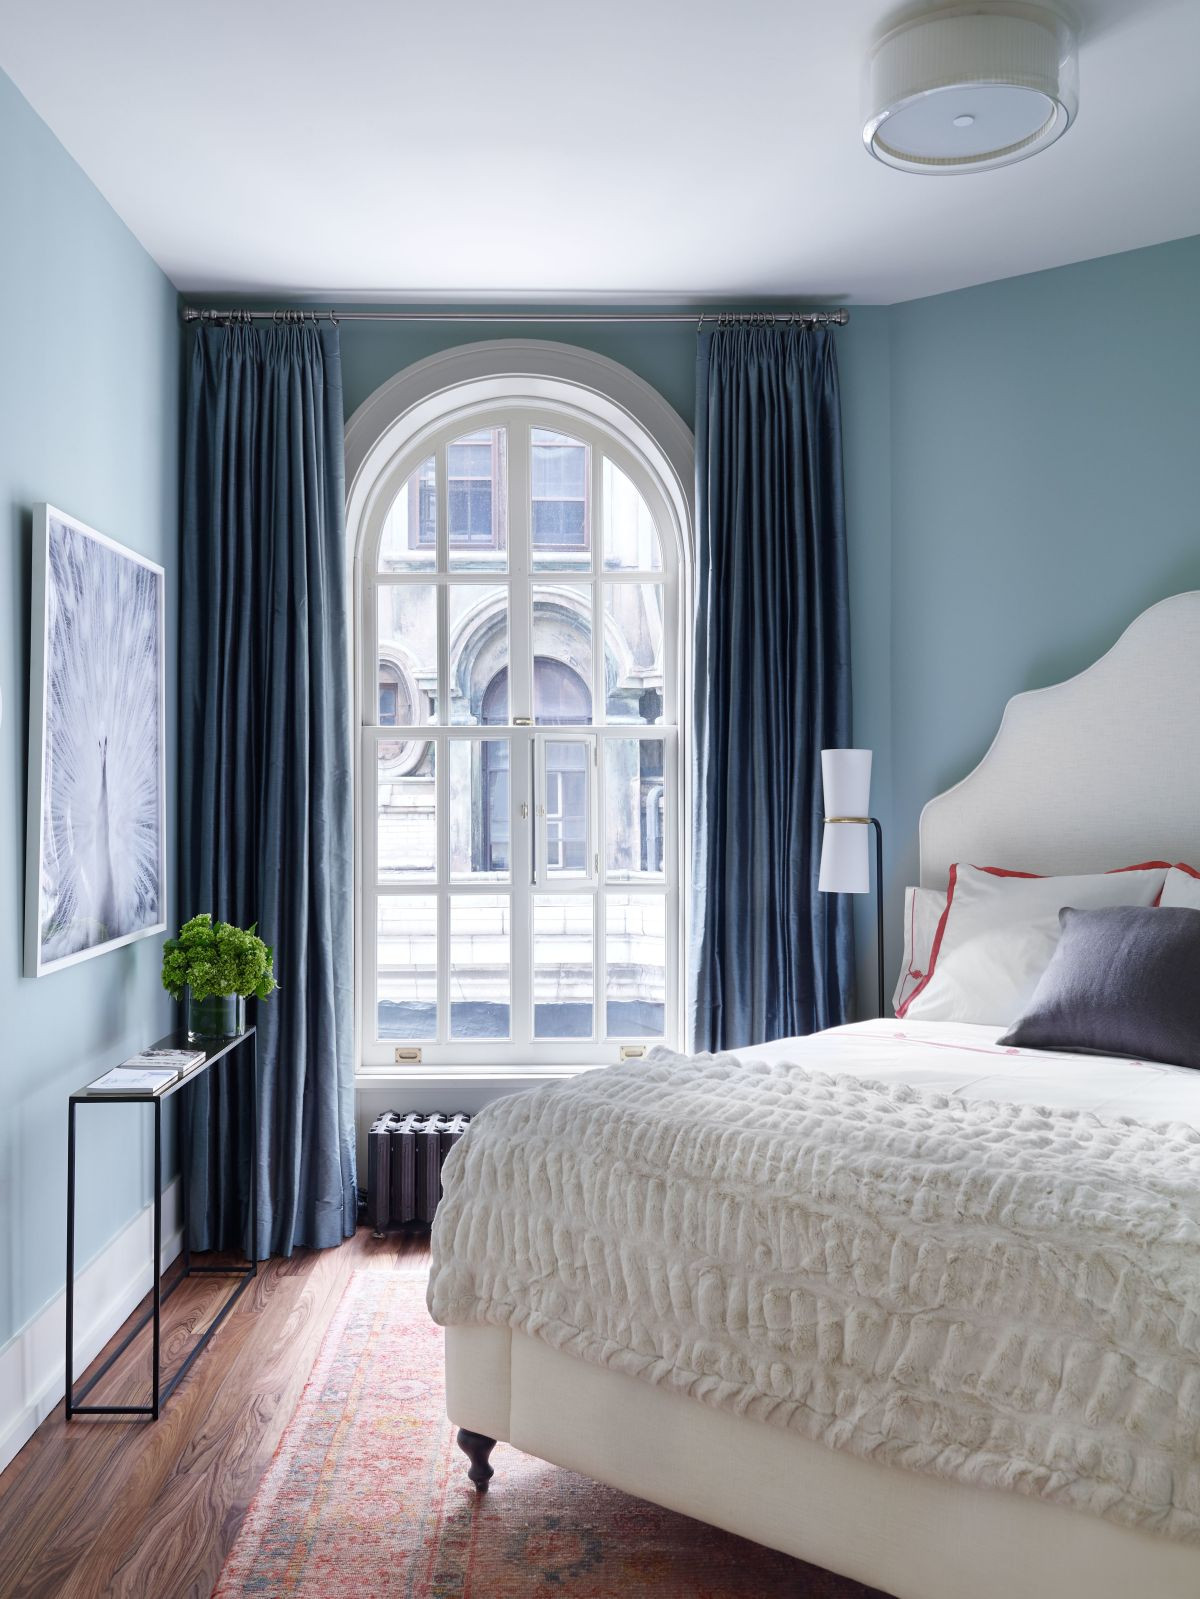 Blue Bedroom Paint Color
 The Four Best Paint Colors For Bedrooms